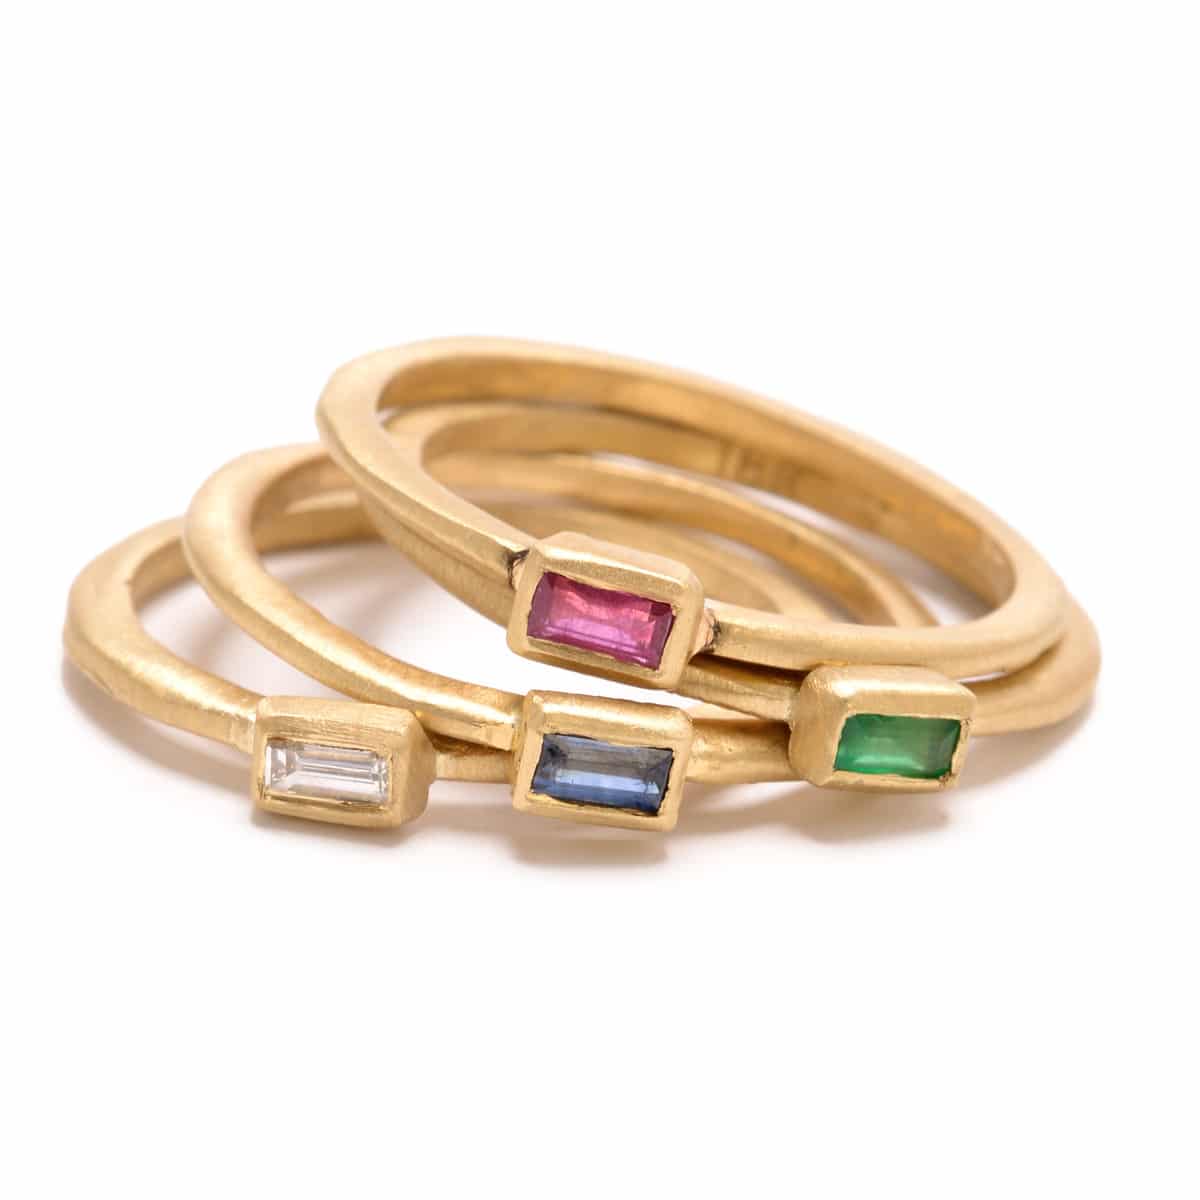 gold and gemstone bracelets by Page Sargisson an Angela Leslie represented designer